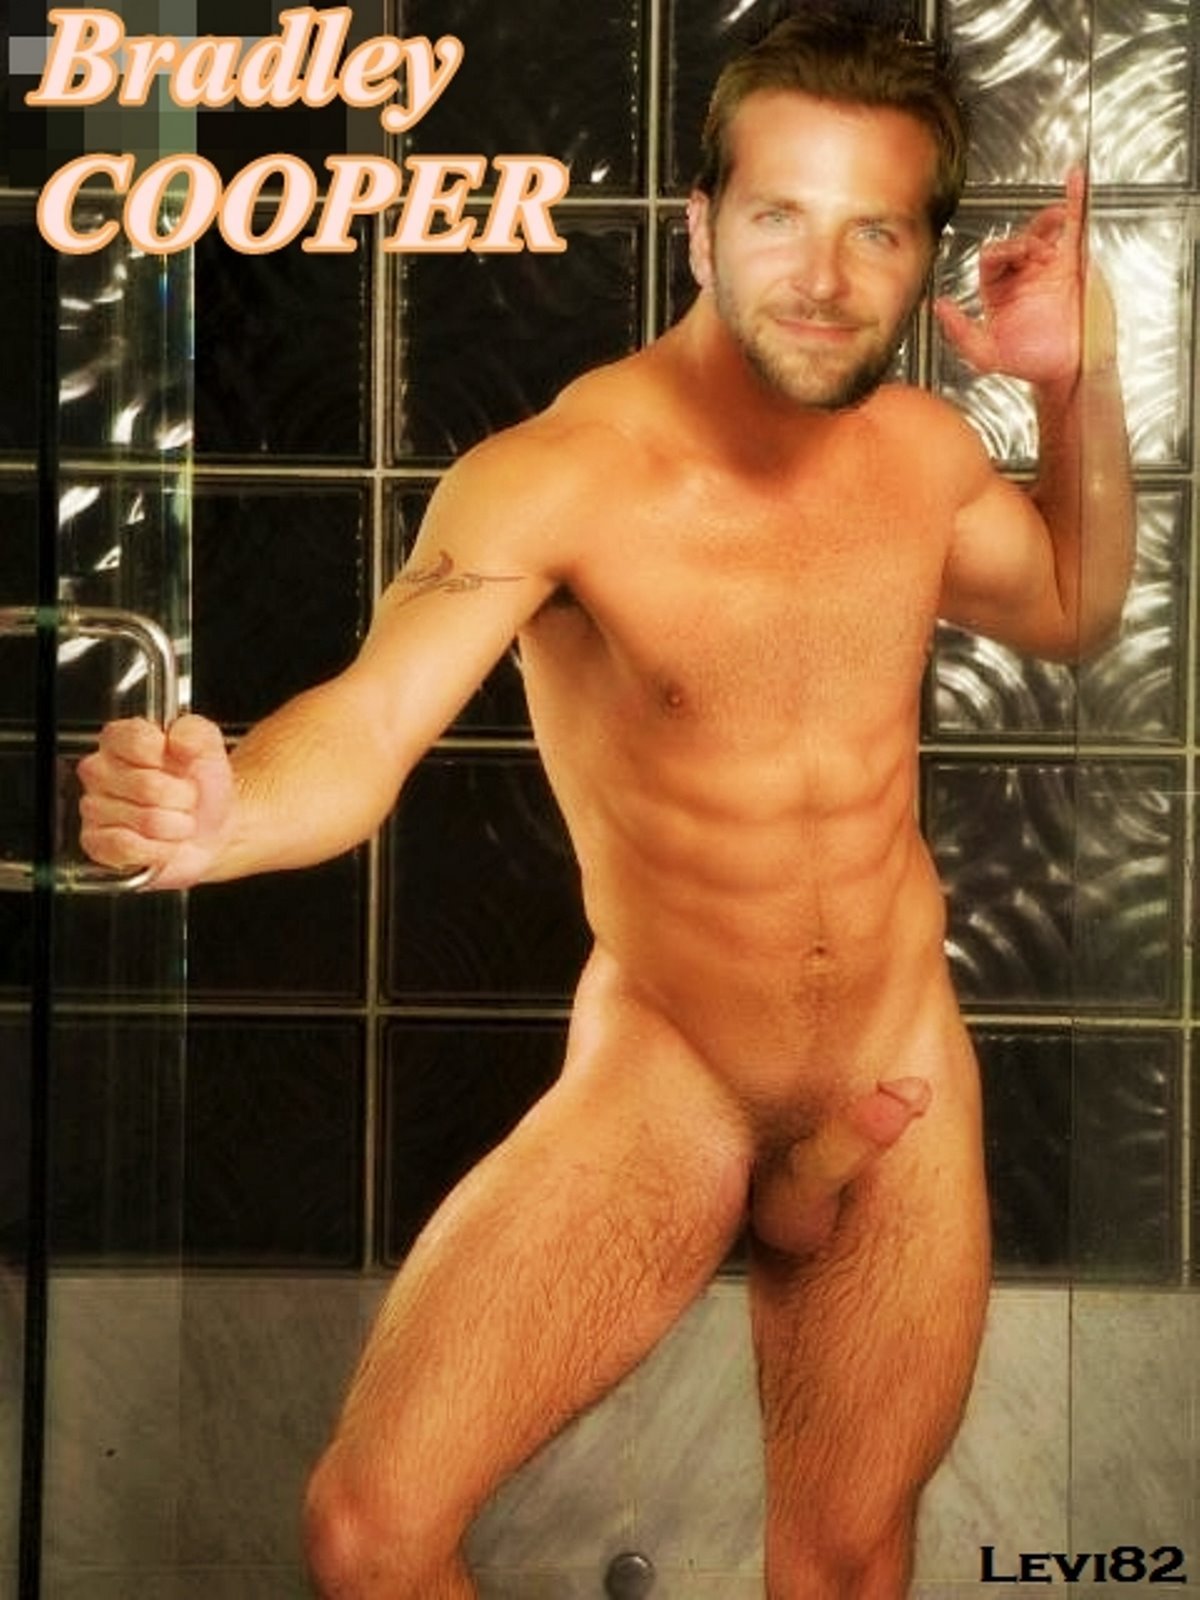 Bradley Cooper Naked Fake insanity chat